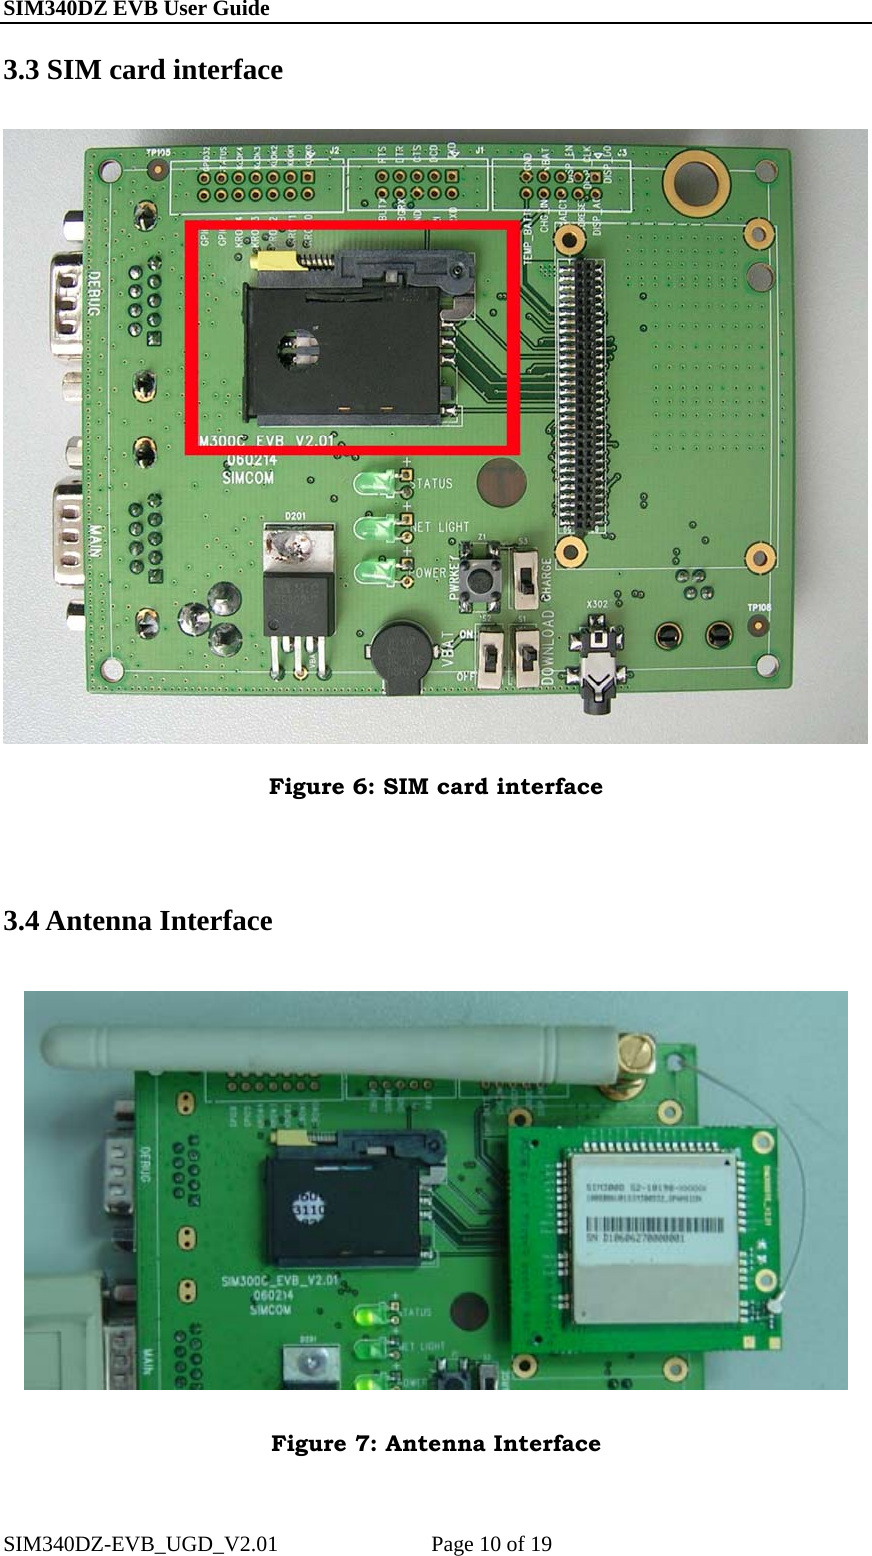 SIM340DZ EVB User Guide                                                       3.3 SIM card interface  Figure 6: SIM card interface  3.4 Antenna Interface  Figure 7: Antenna Interface SIM340DZ-EVB_UGD_V2.01              Page 10 of 19 